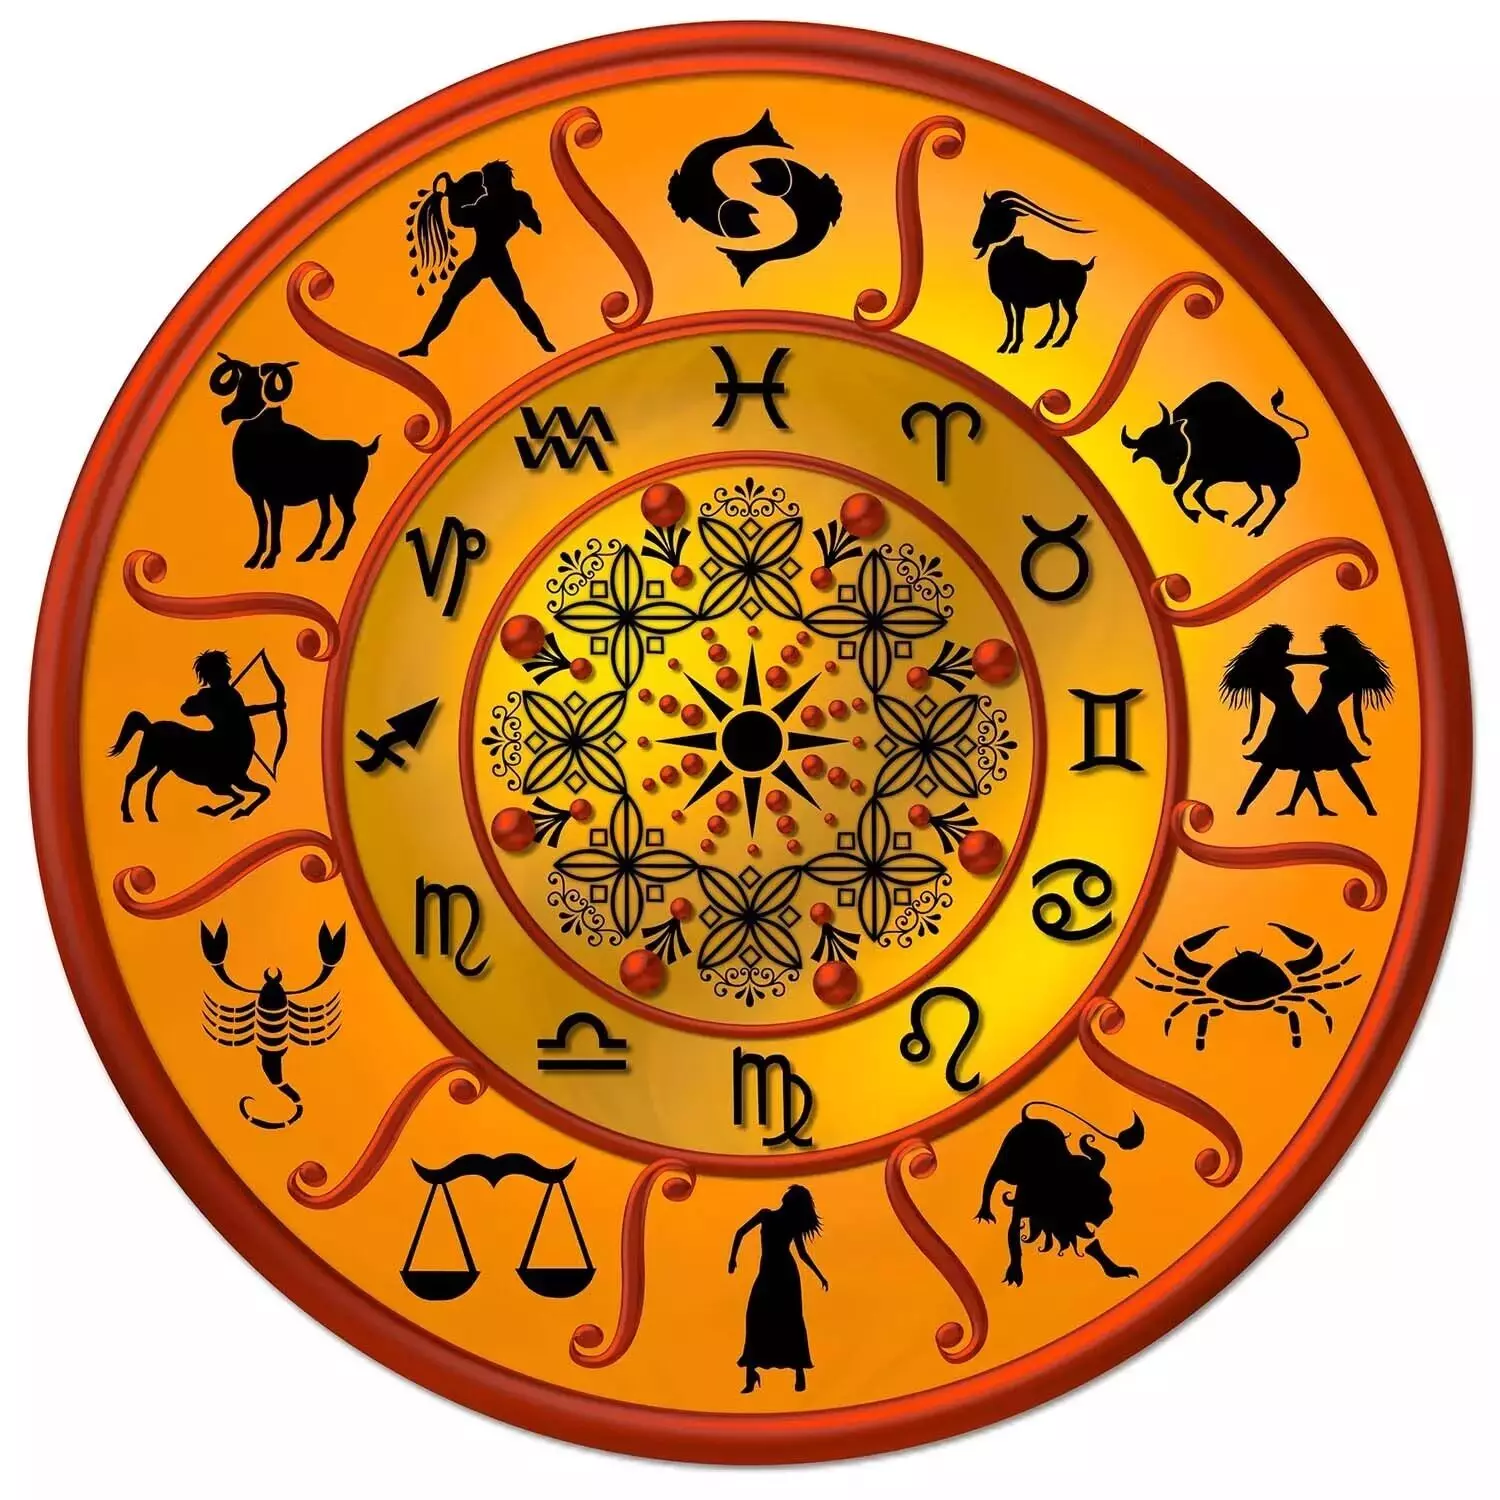 26 Novembar  – Know your todays horoscope